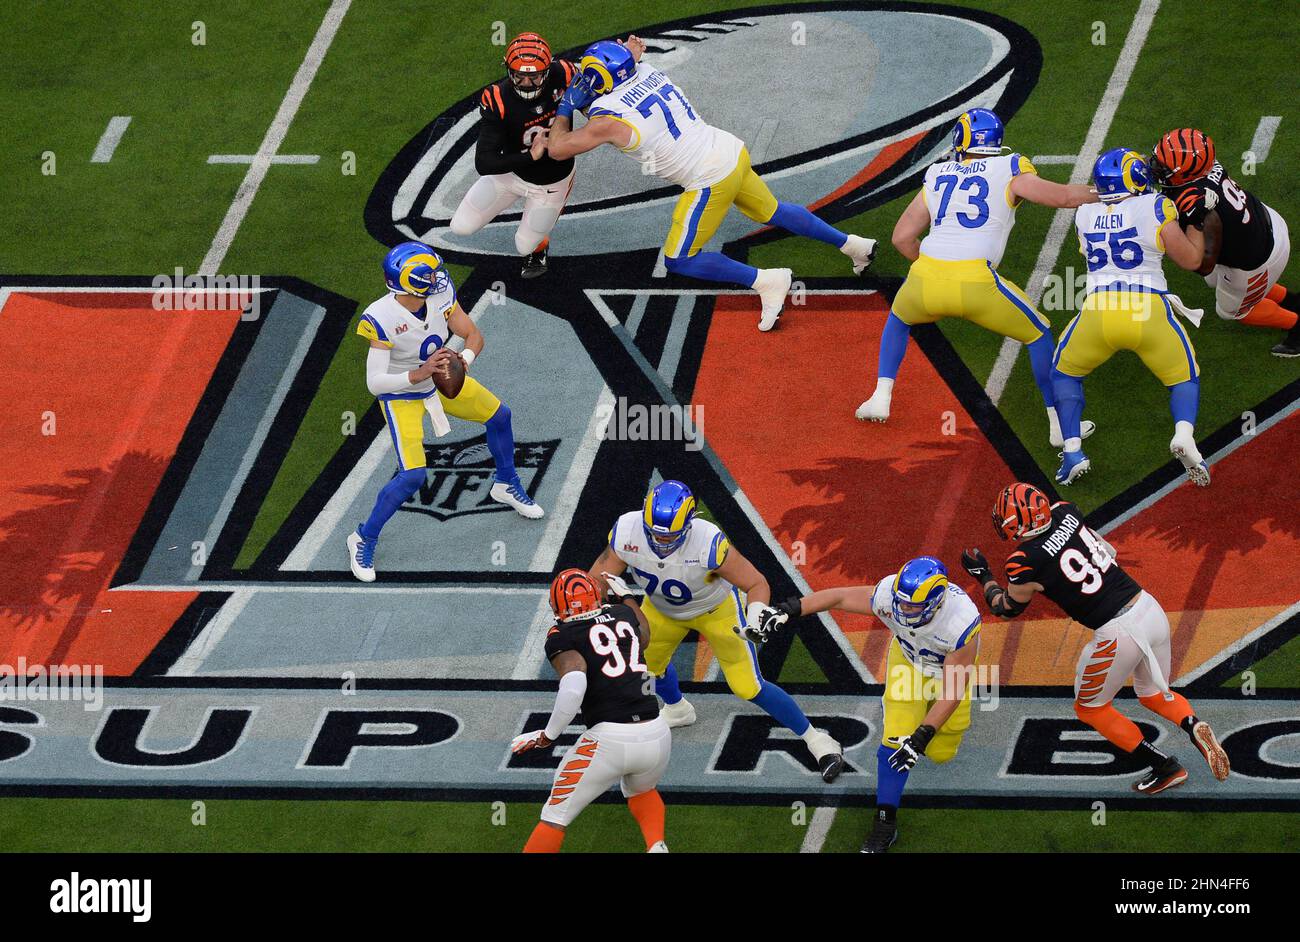 Los Angeles, USA. 14th. Februar 2022. Los Angeles Rams' Stafford (1st L) tritt beim NFL Super Bowl LVI-Spiel zwischen Cincinnati Bengals und Los Angeles Rams am 13. Februar 2022 im SoFi Stadium in Los Angeles, USA, an. Quelle: Xinhua/Alamy Live News Stockfoto